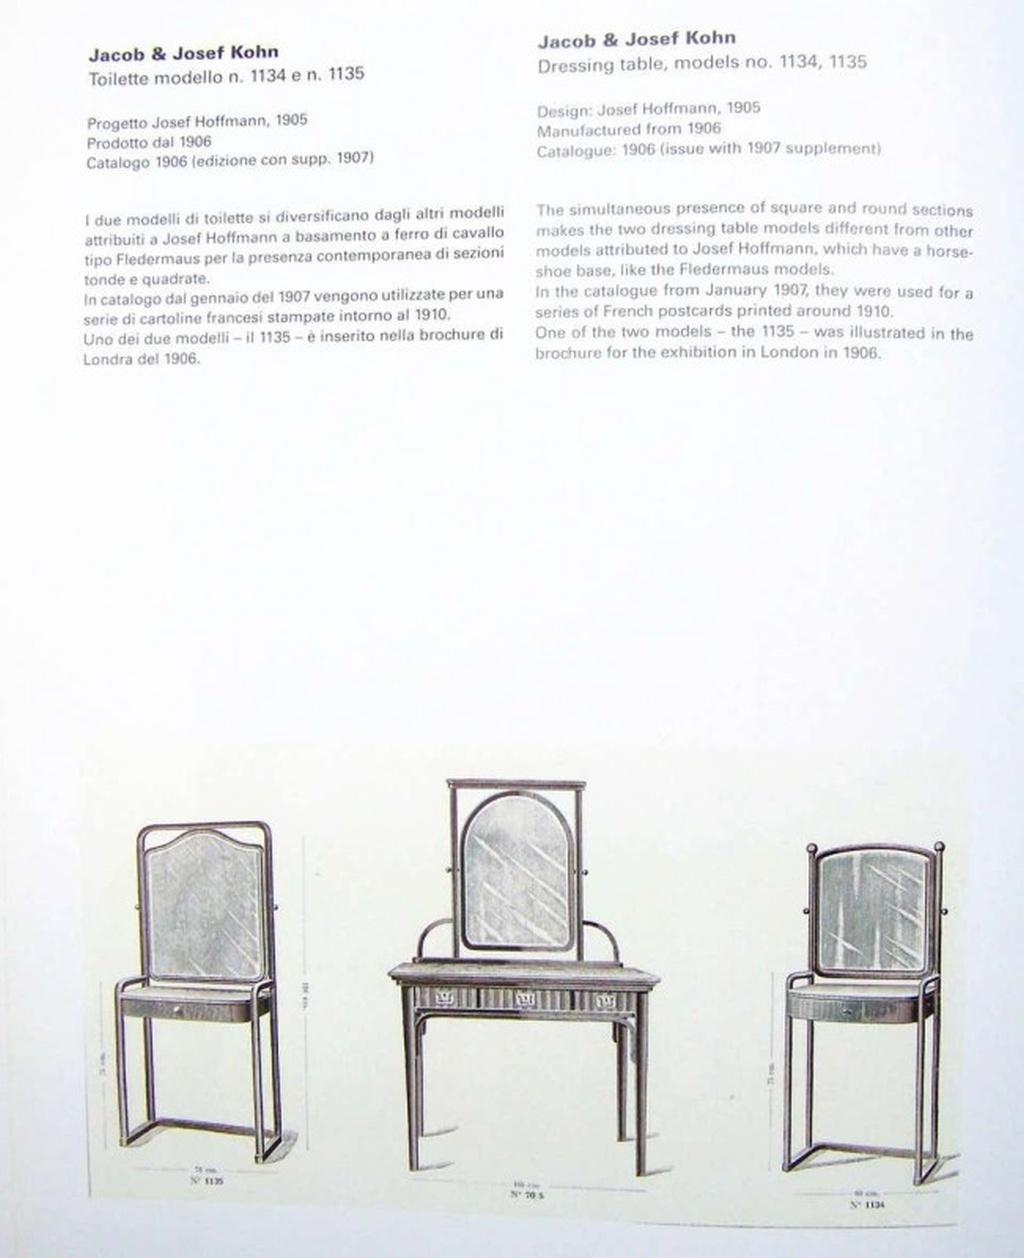 Mirror Dressing Table No.1134 by Josef Hoffmann for J&J Kohn For Sale